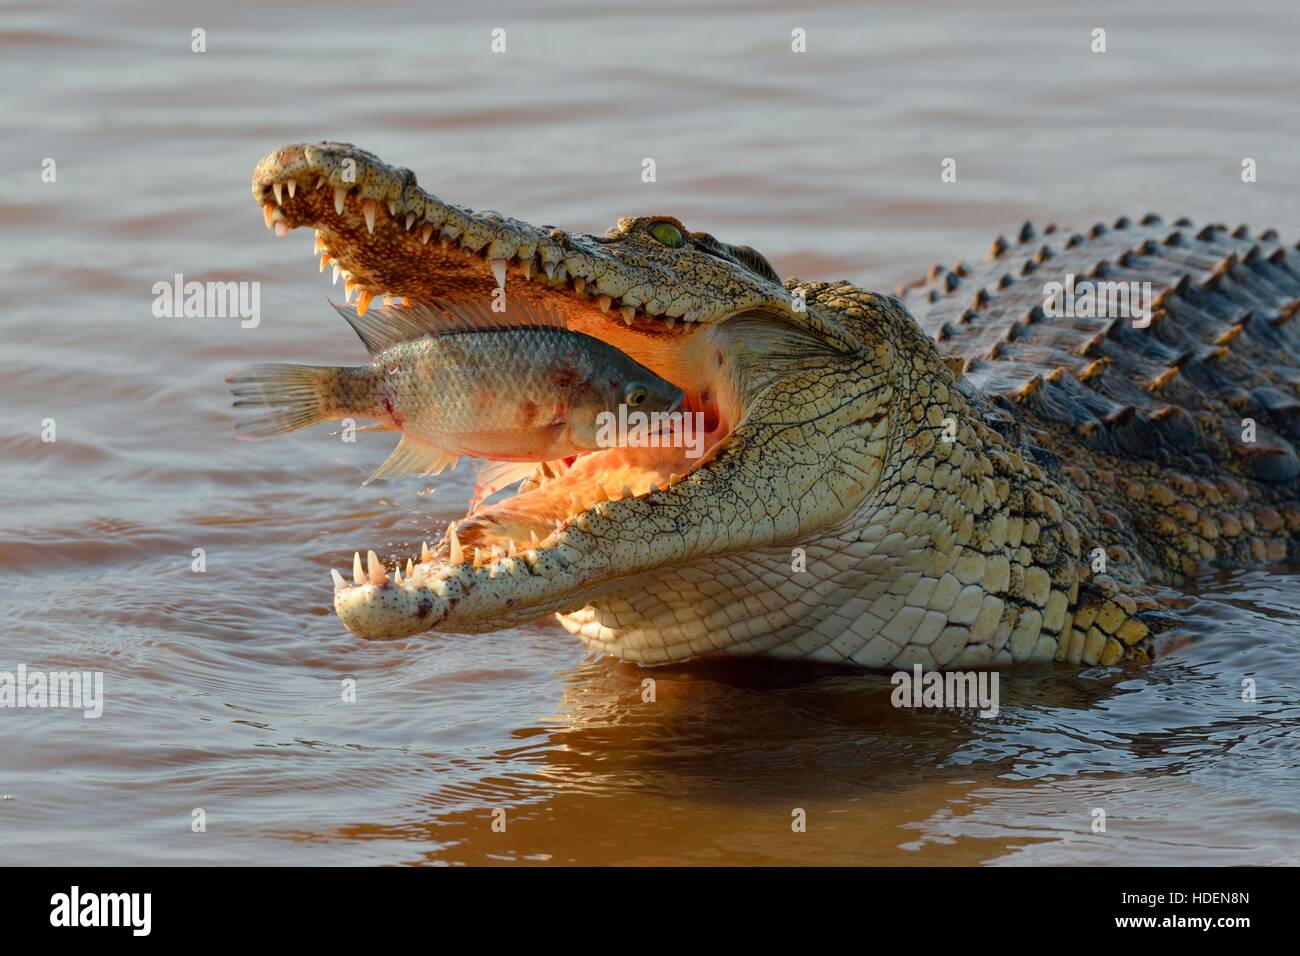 Nilkrokodil (Crocodylus niloticus), Krokodil mit noch lebenden Fischen im Maul, Sunset Dam, Kruger-Nationalpark, Südafrika, Afrika Stockfoto